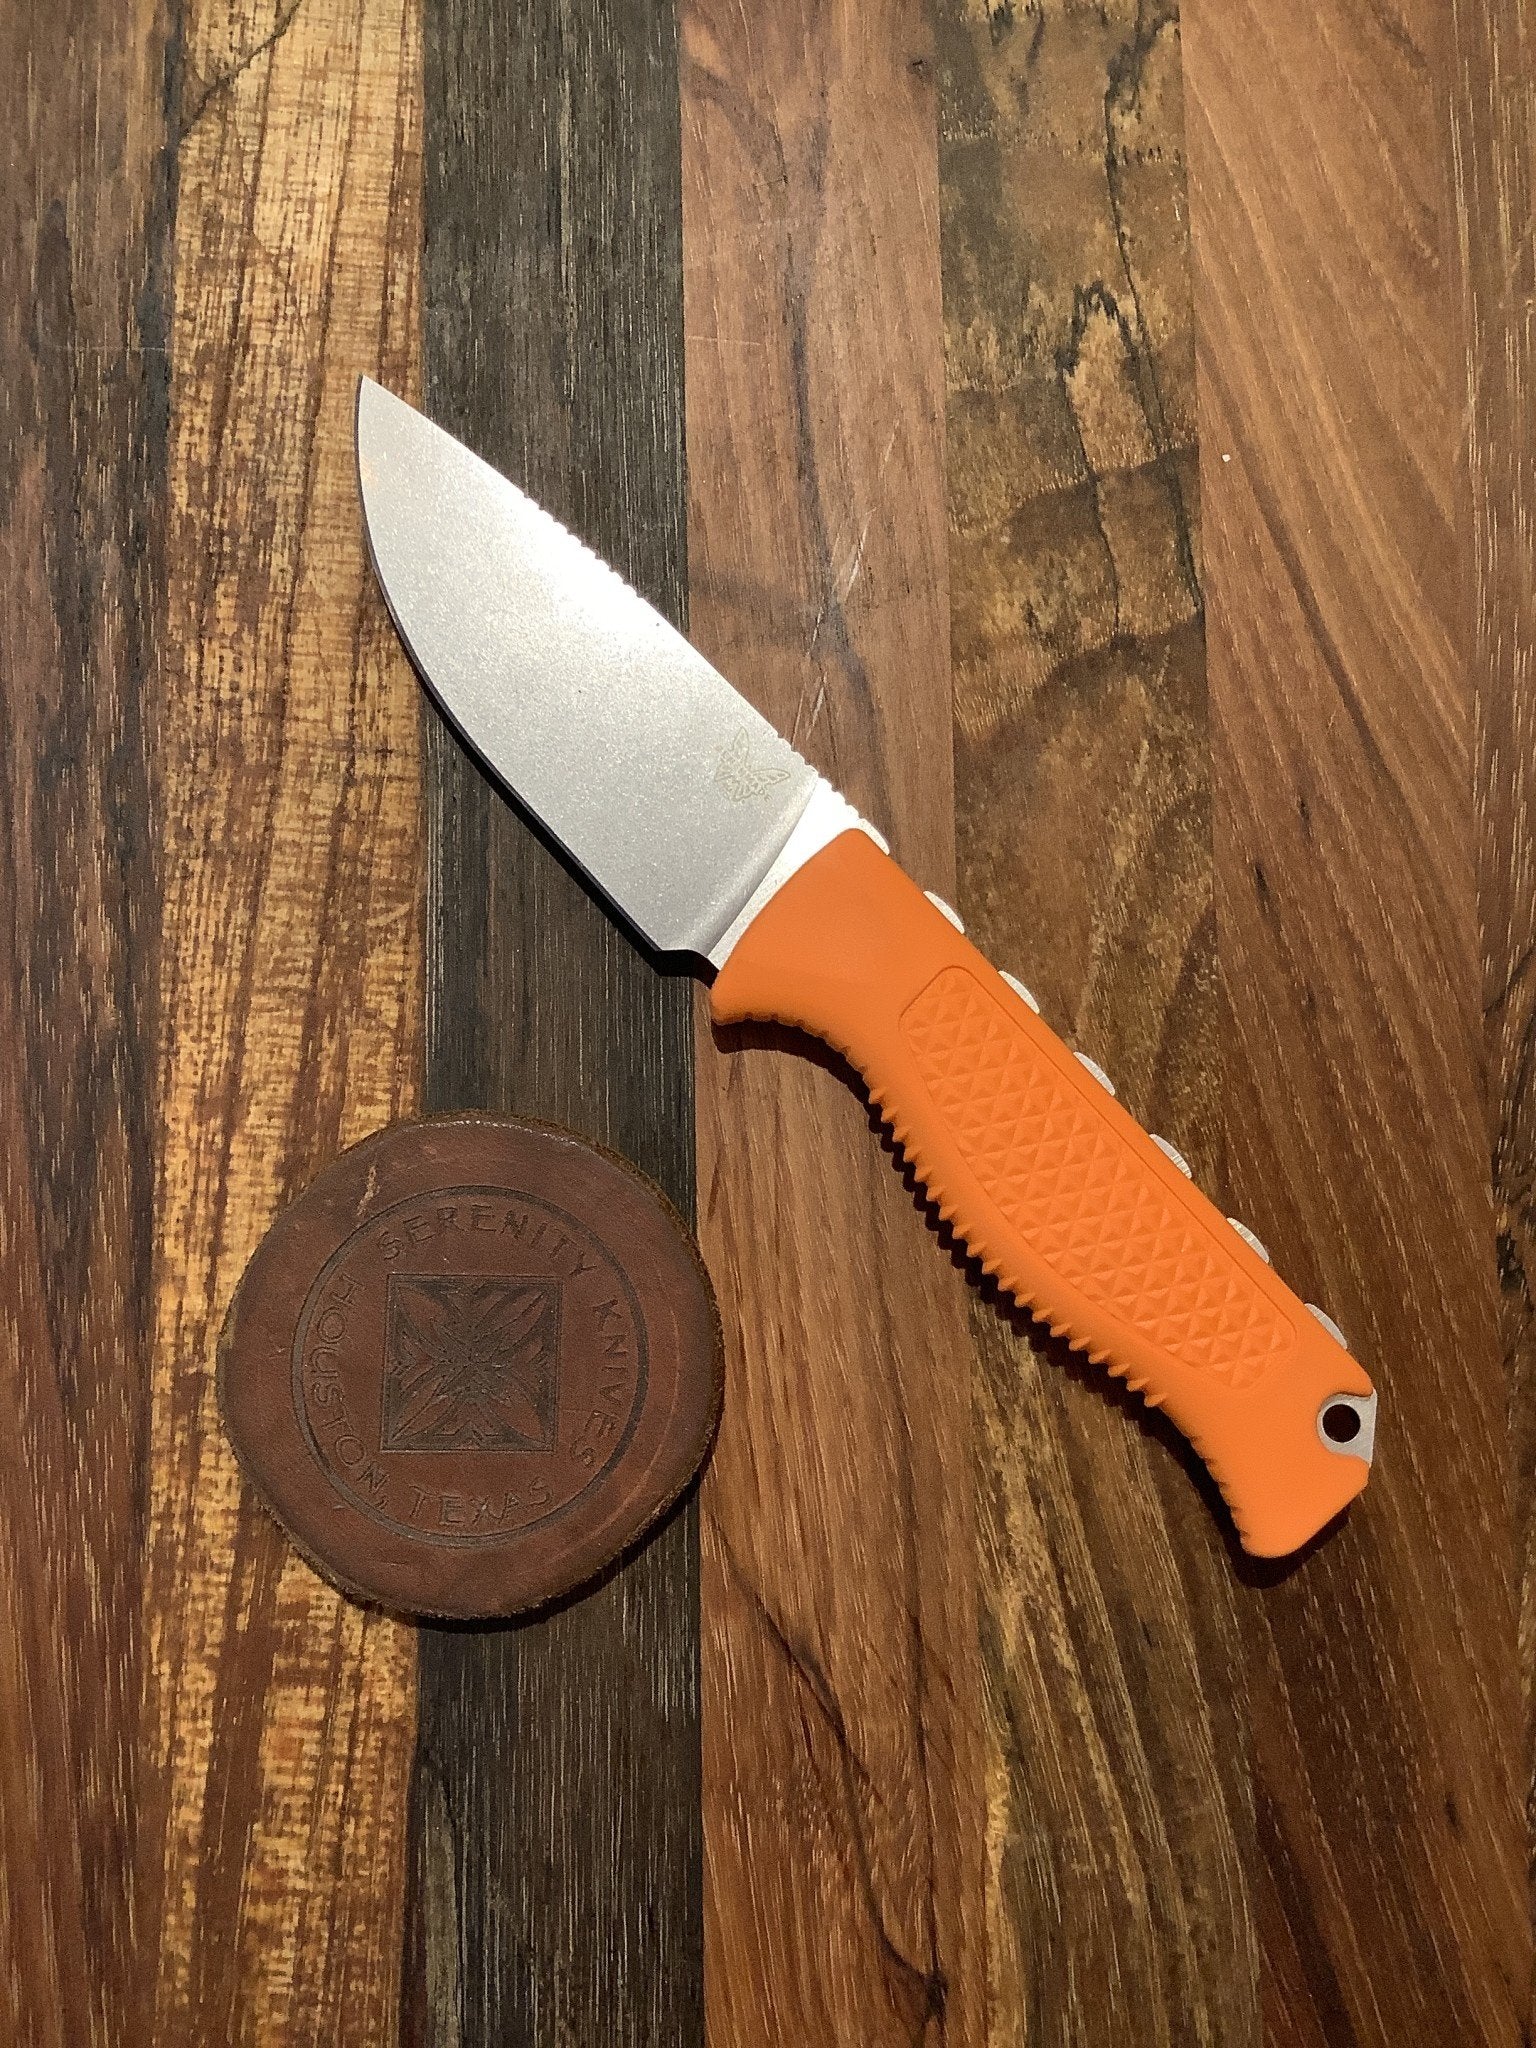 Steep Country Fixed Blade with Orange Santoprene